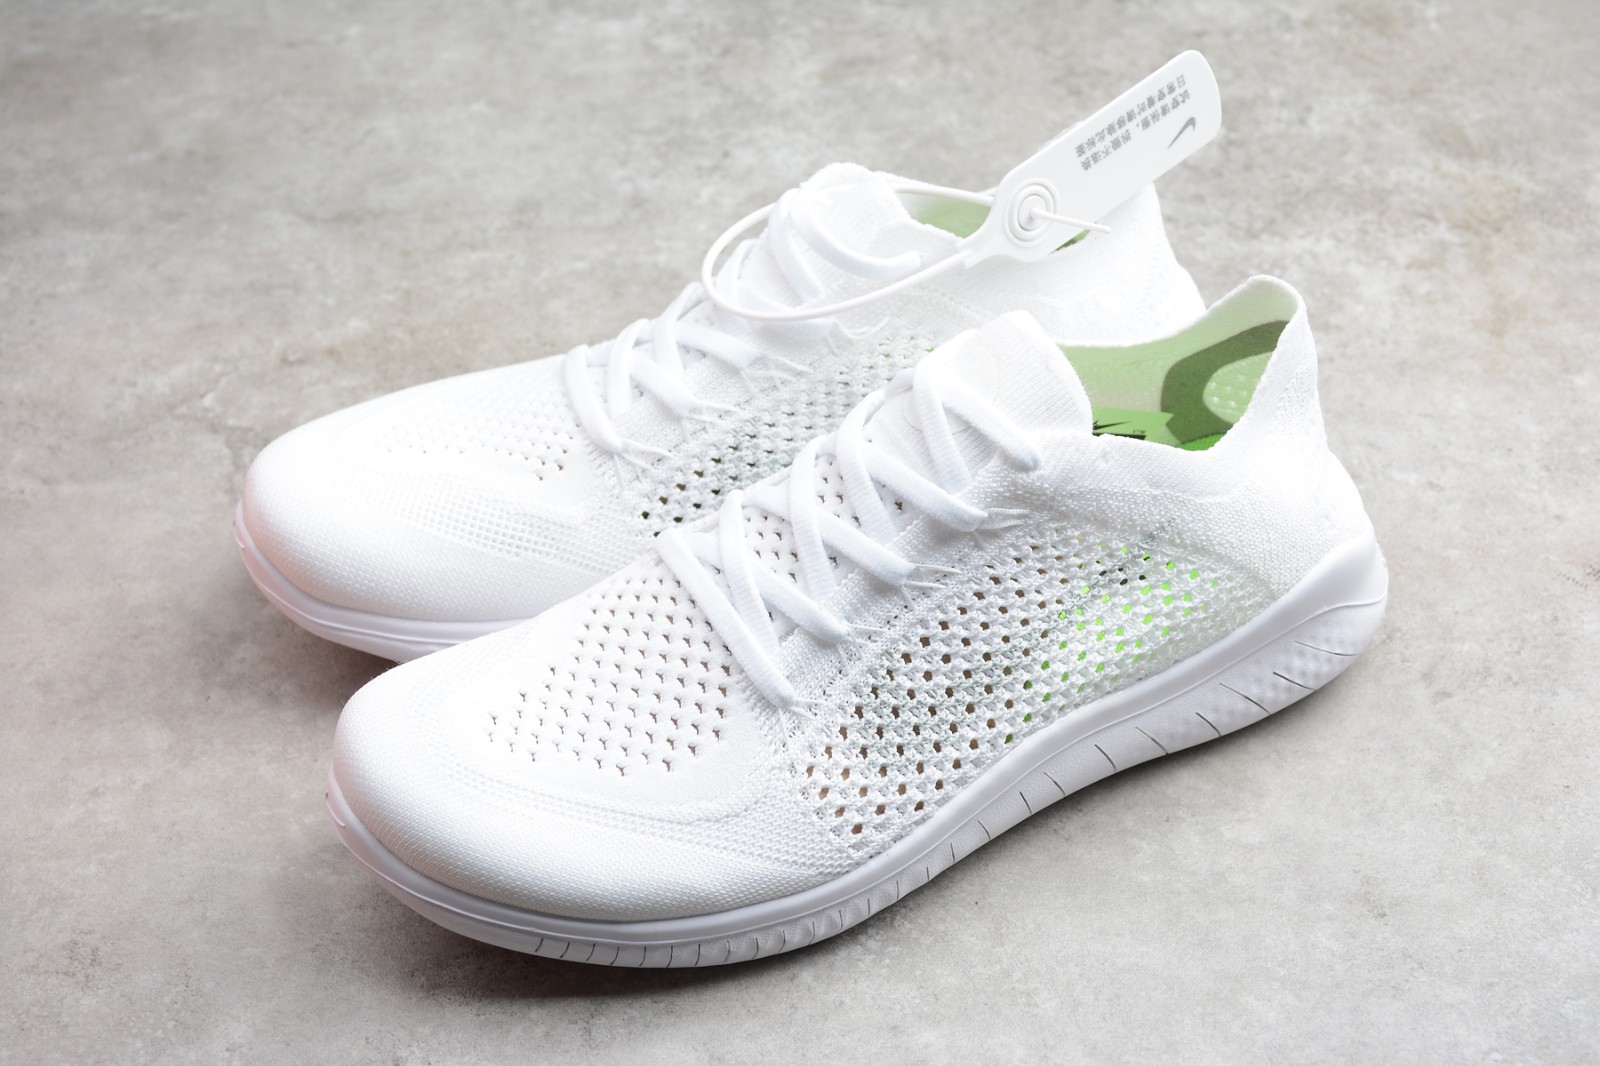 New Nike Free RN Triple White Comfy Shoes 942838 - Dunk High Grey - 103 - StclaircomoShops